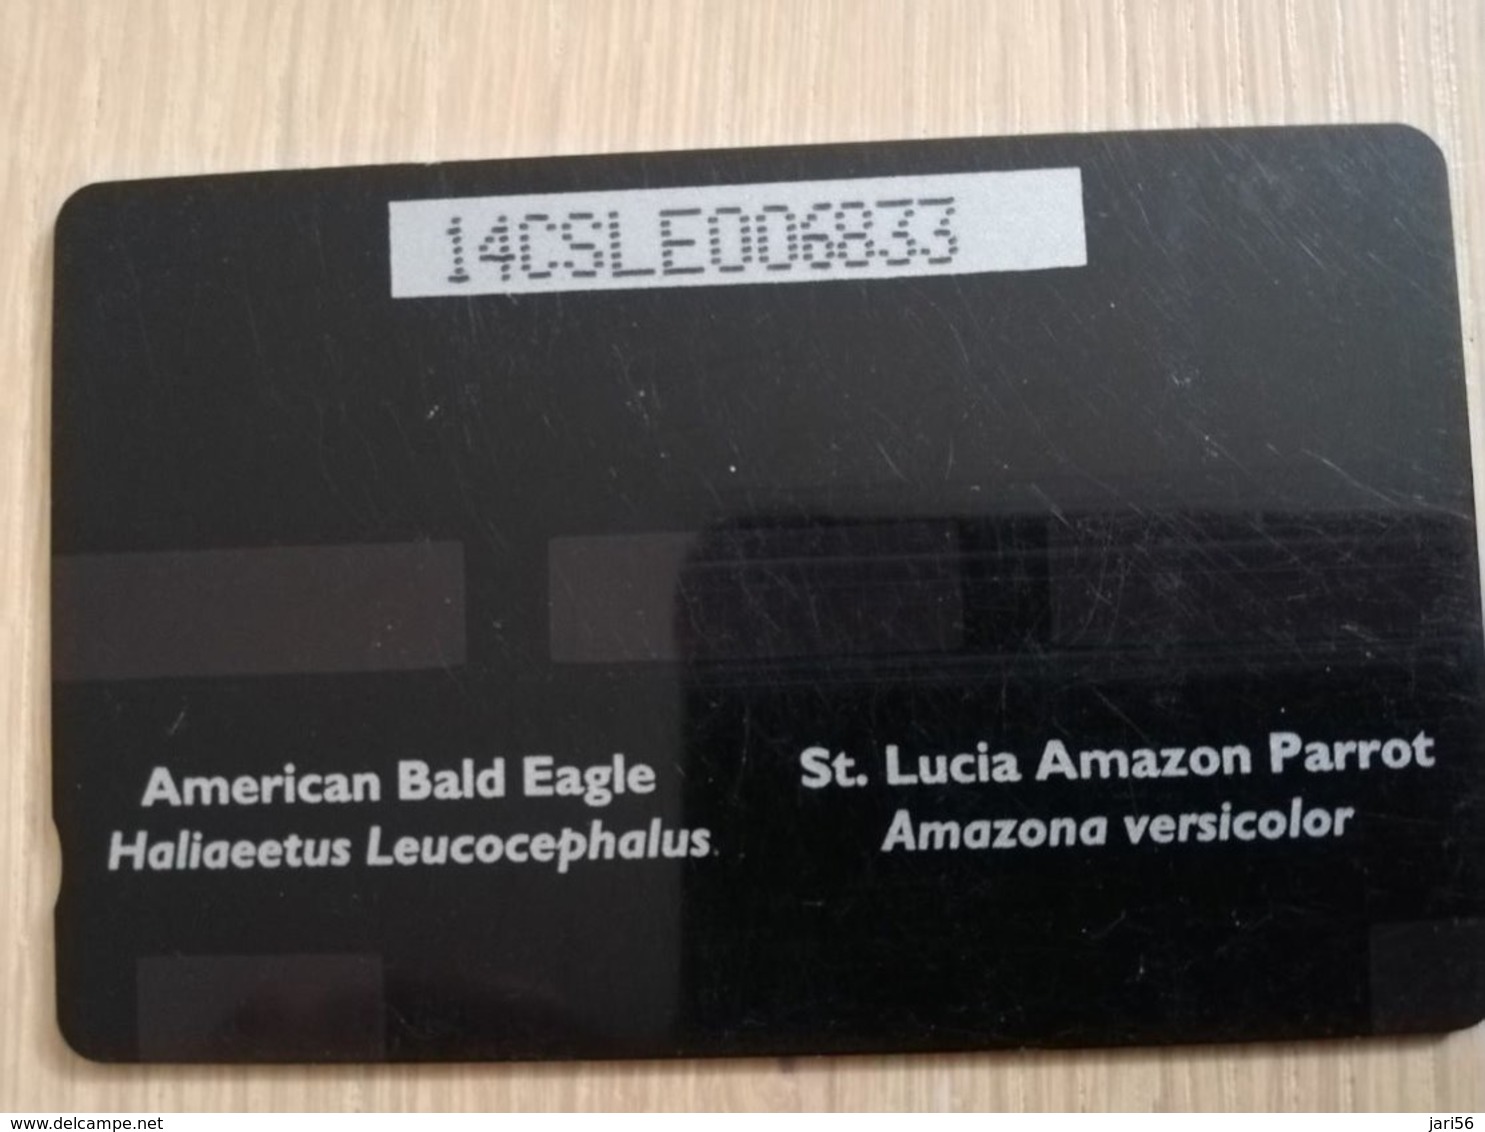 ST LUCIA    $ 53/ US 20  CABLE & WIRELESS  STL-14E  14CSLE    PARROT/EAGLE  Fine Used Card ** 2408** - St. Lucia